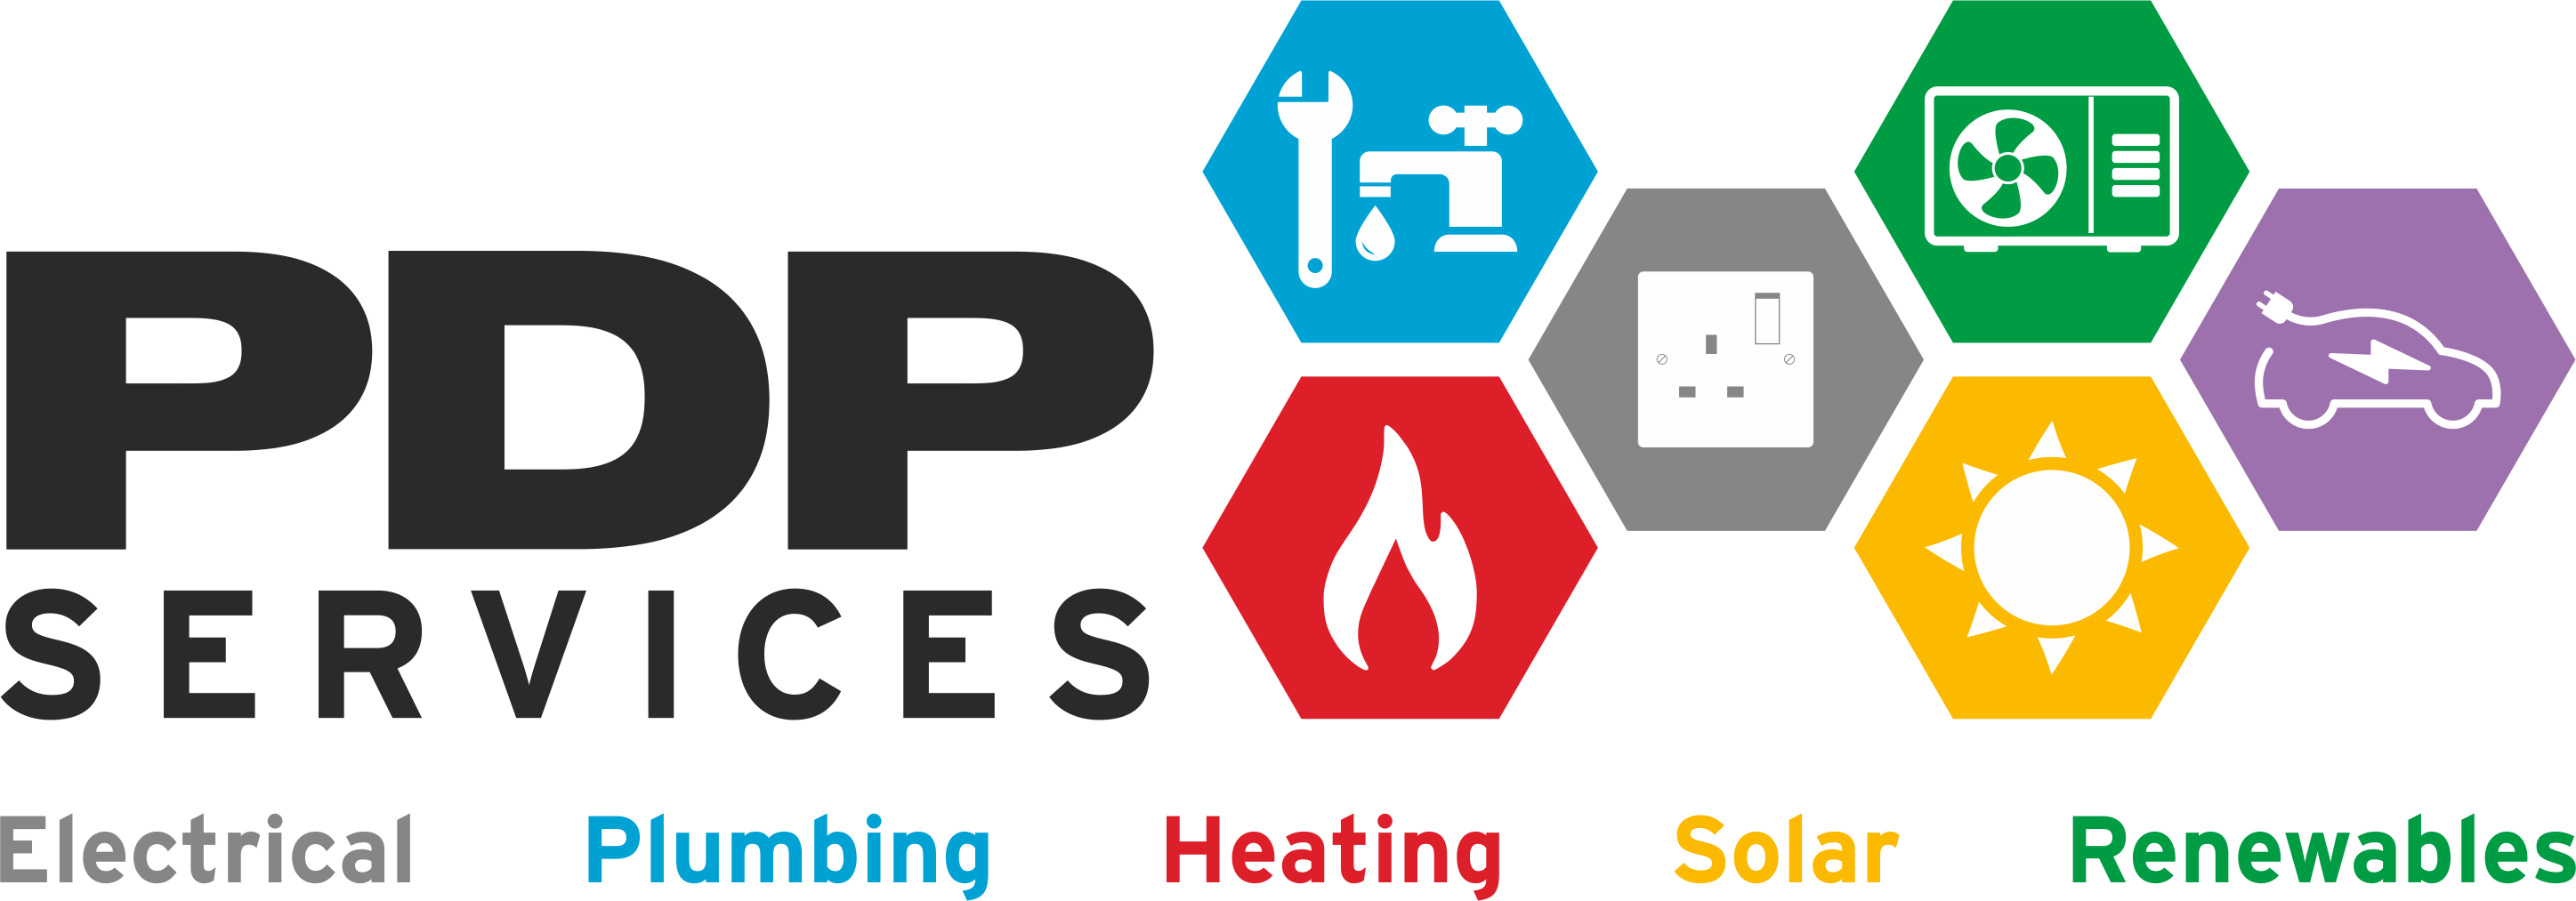 PDP services logo